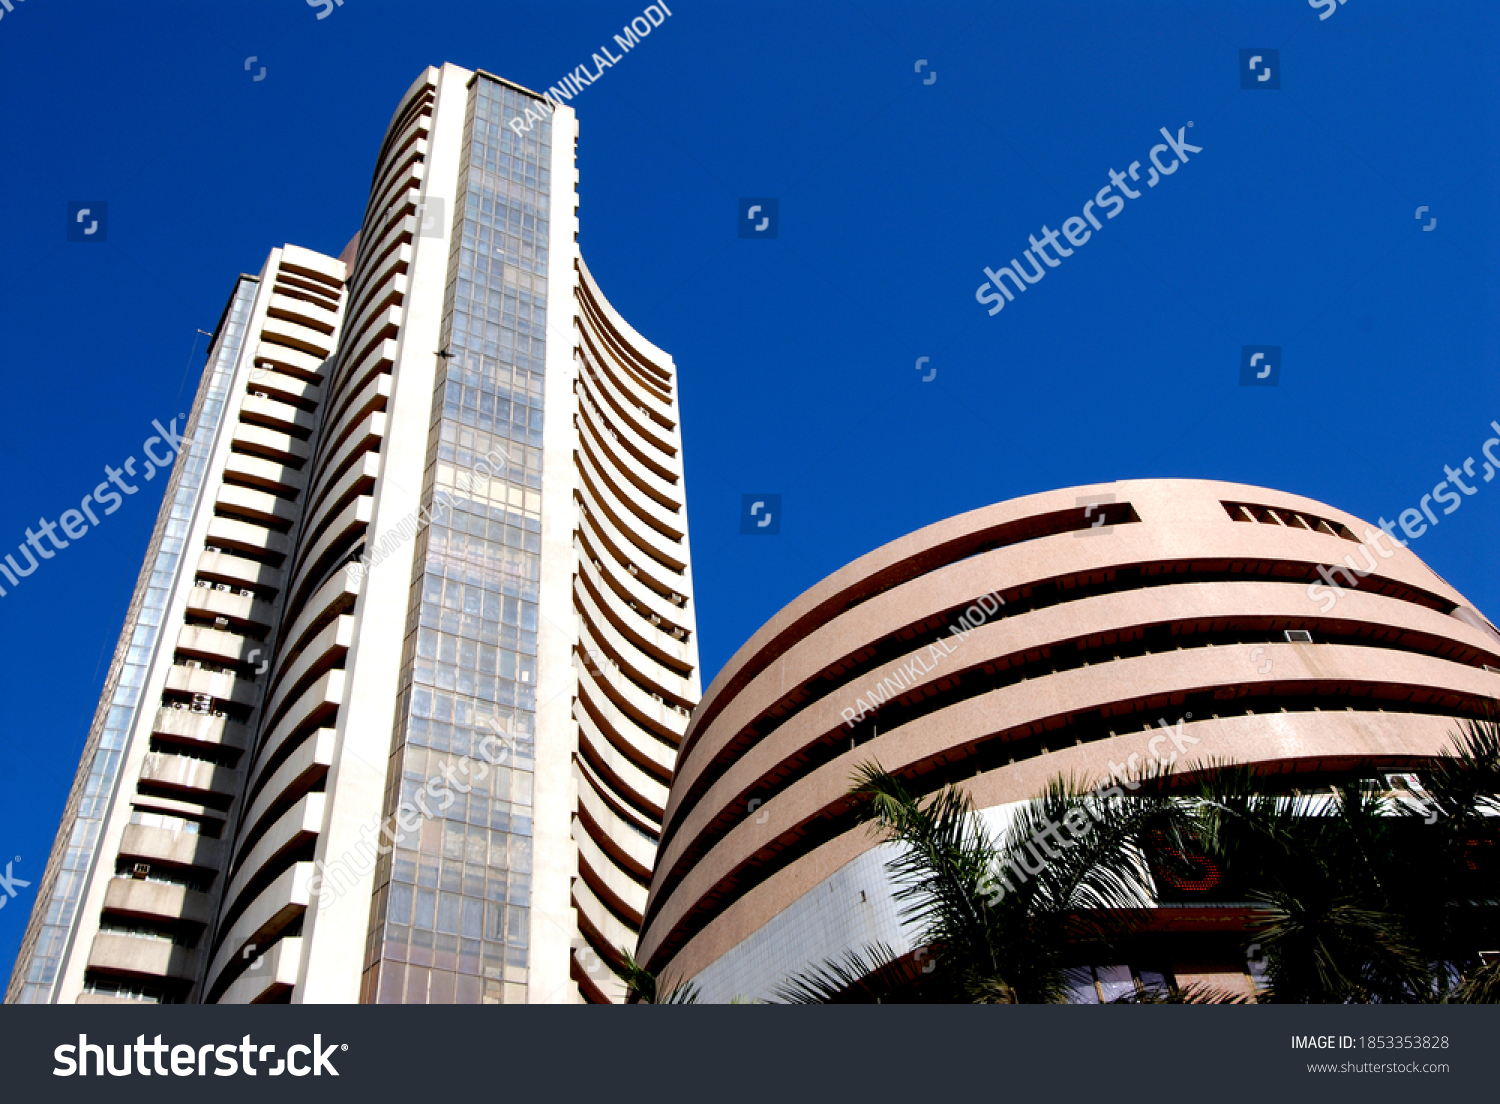 726 India financial centre Images Stock Photos Vectors